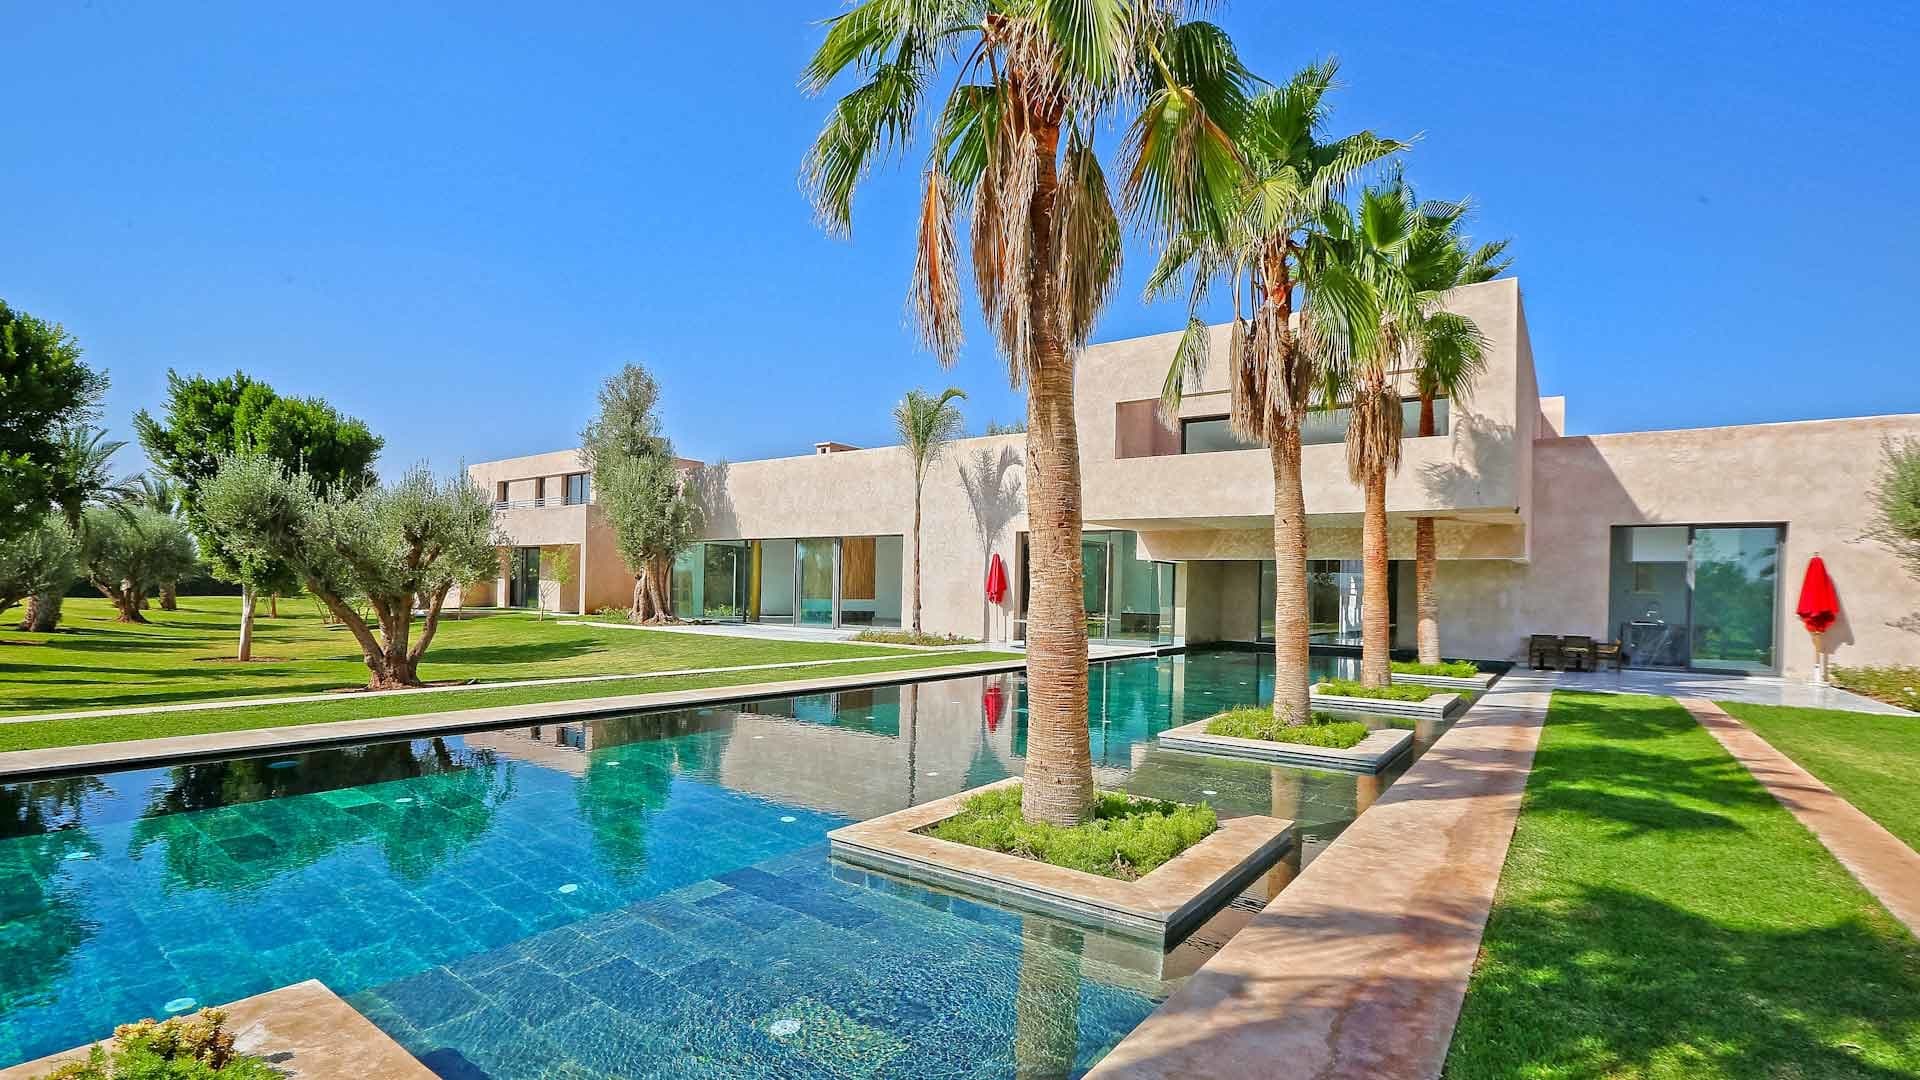 6 Bedroom Villa For Sale Marrakech Lp08723 3215449ce2892c0.jpg